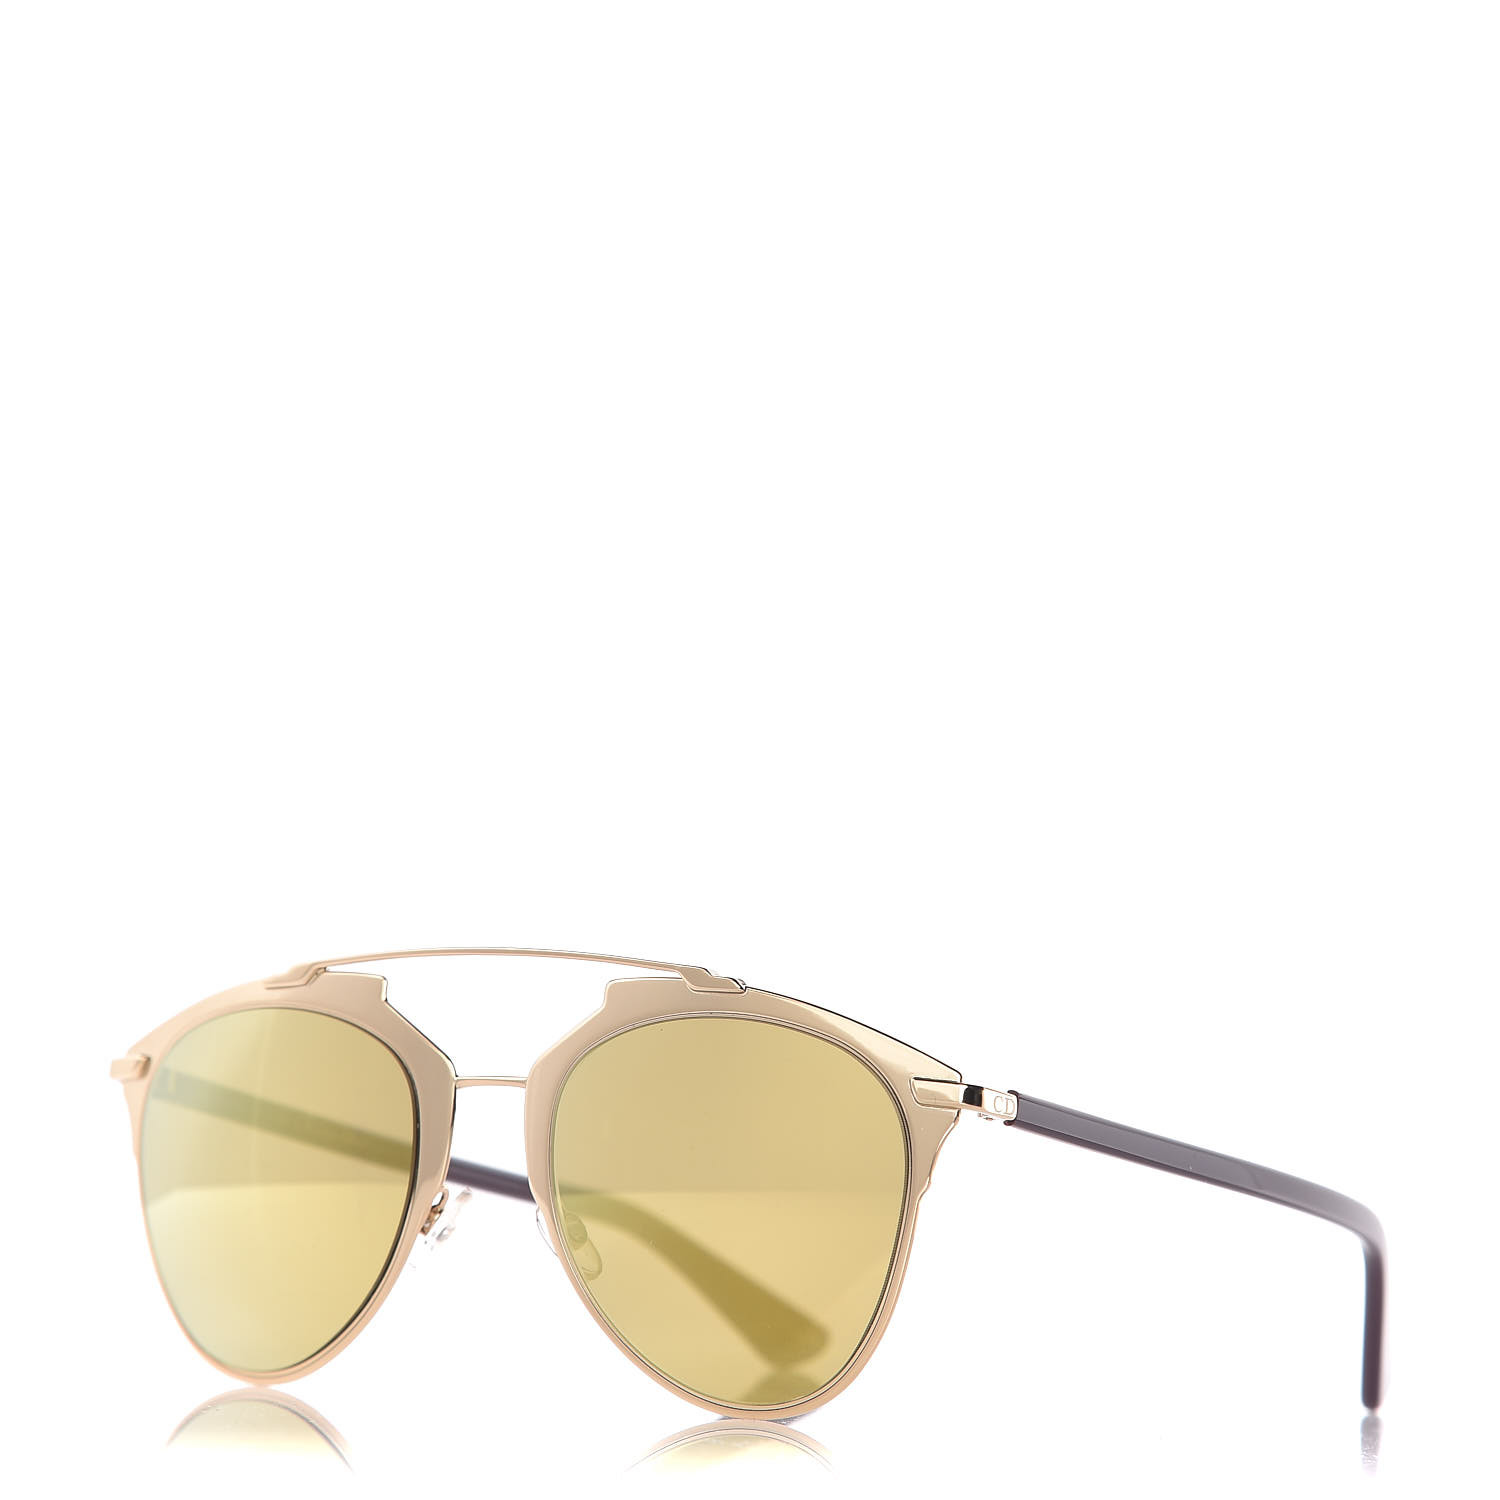 dior reflected sunglasses gold